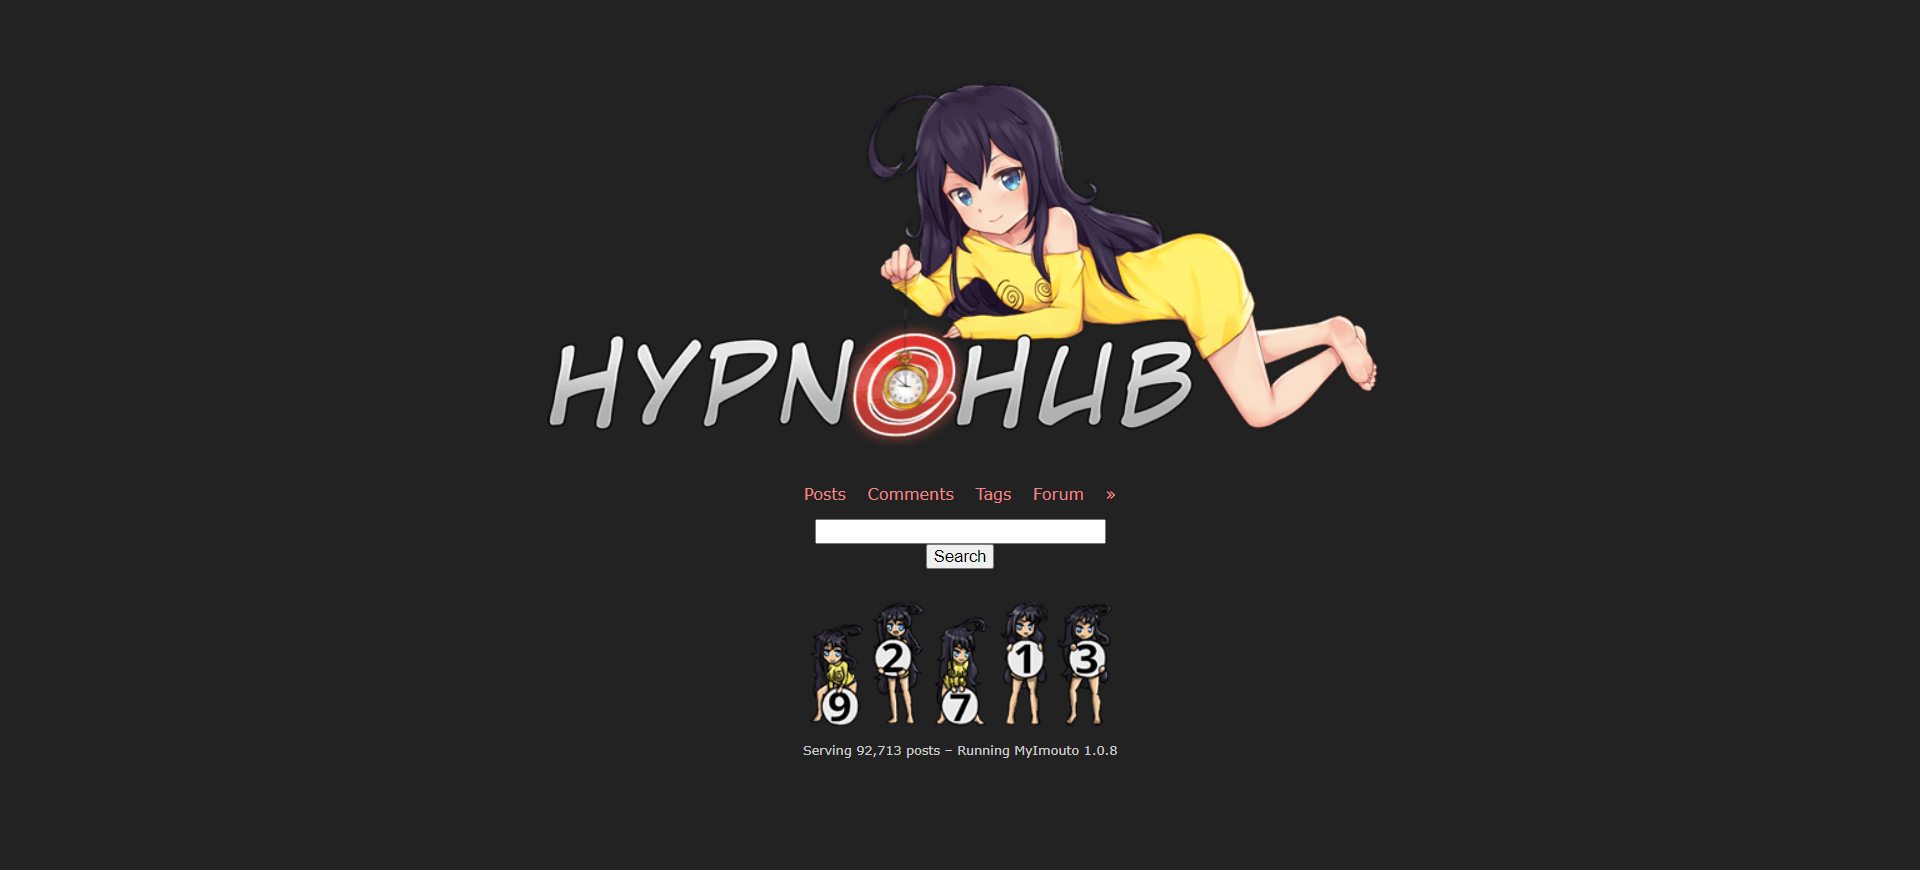 HypnoHub Review Image